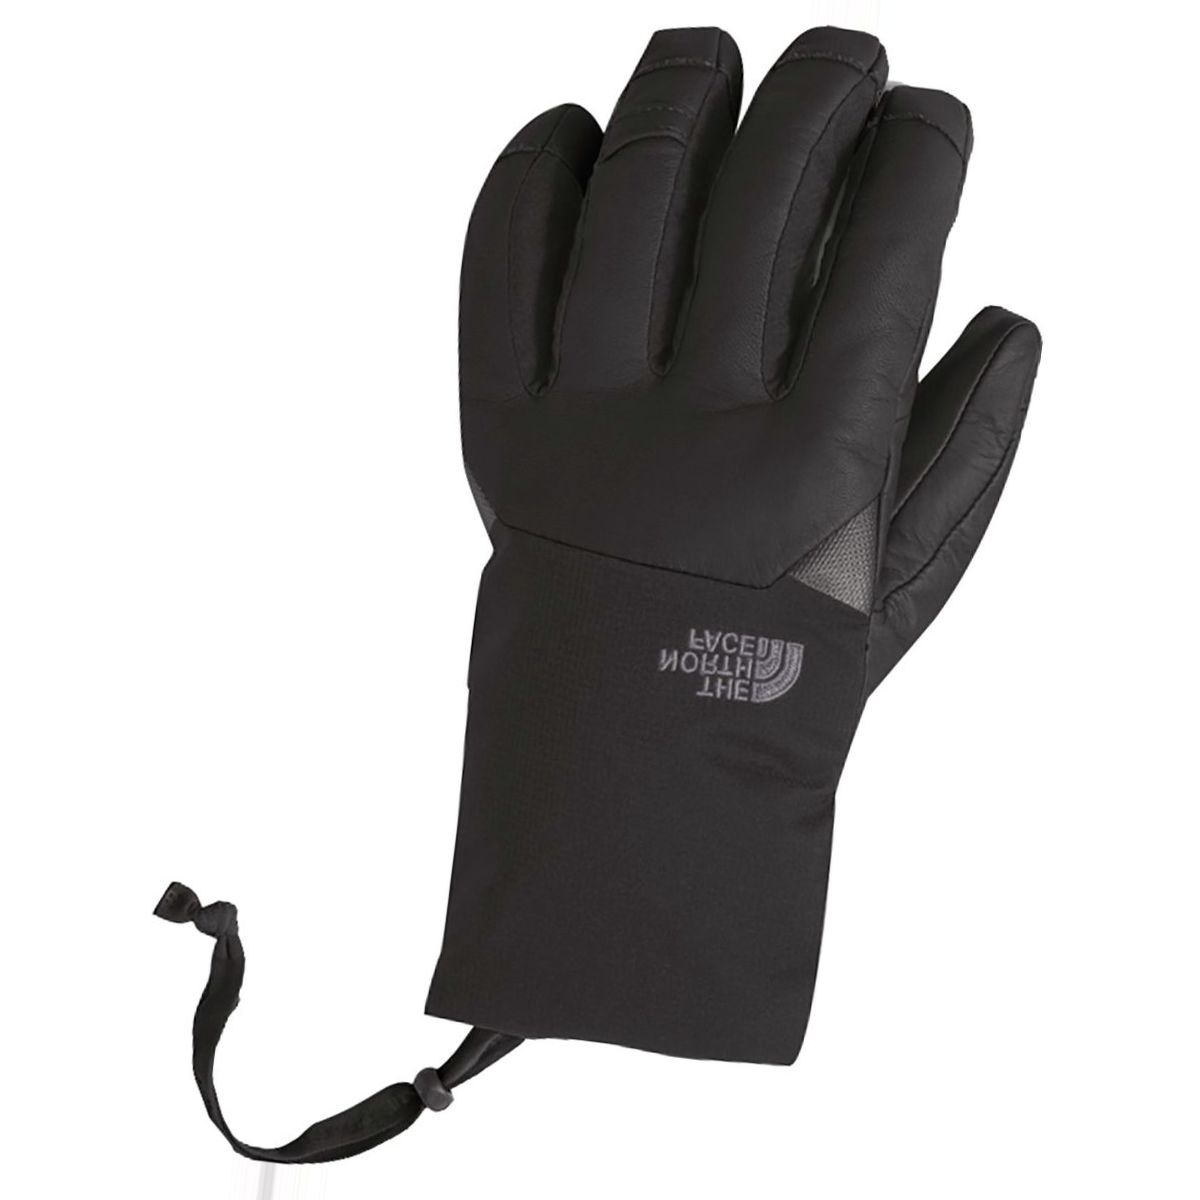 The North Face Patrol Glove - Men's